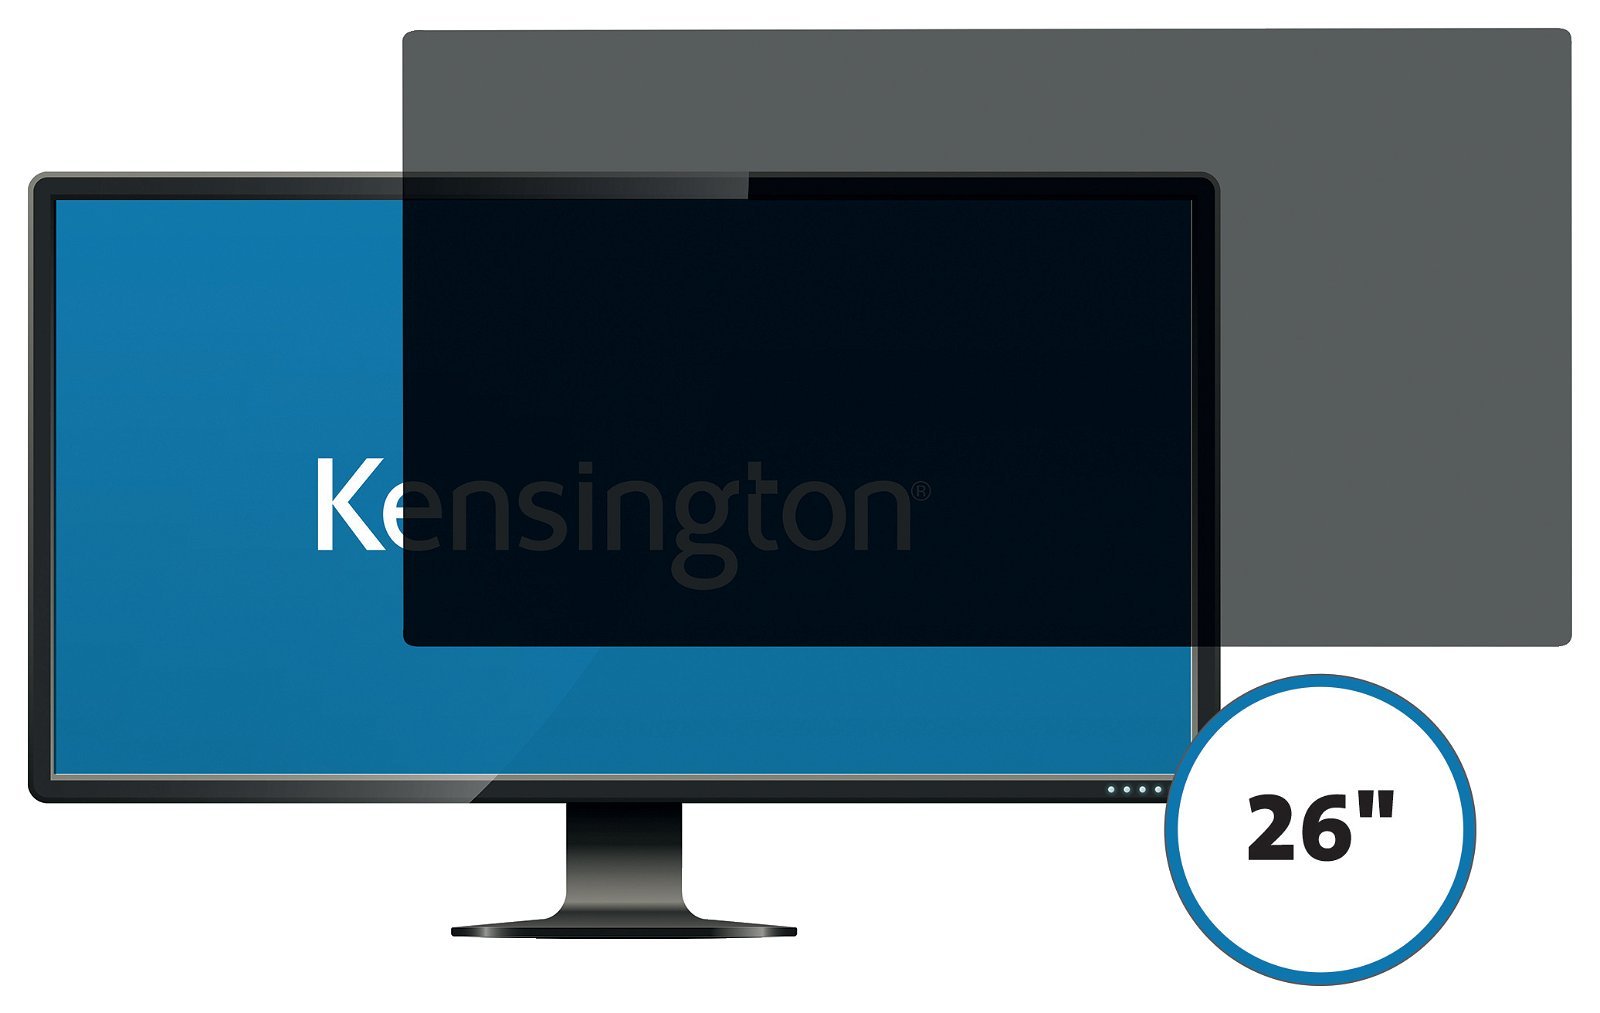 Kensington skærmfilter 26" 16:9 transparent